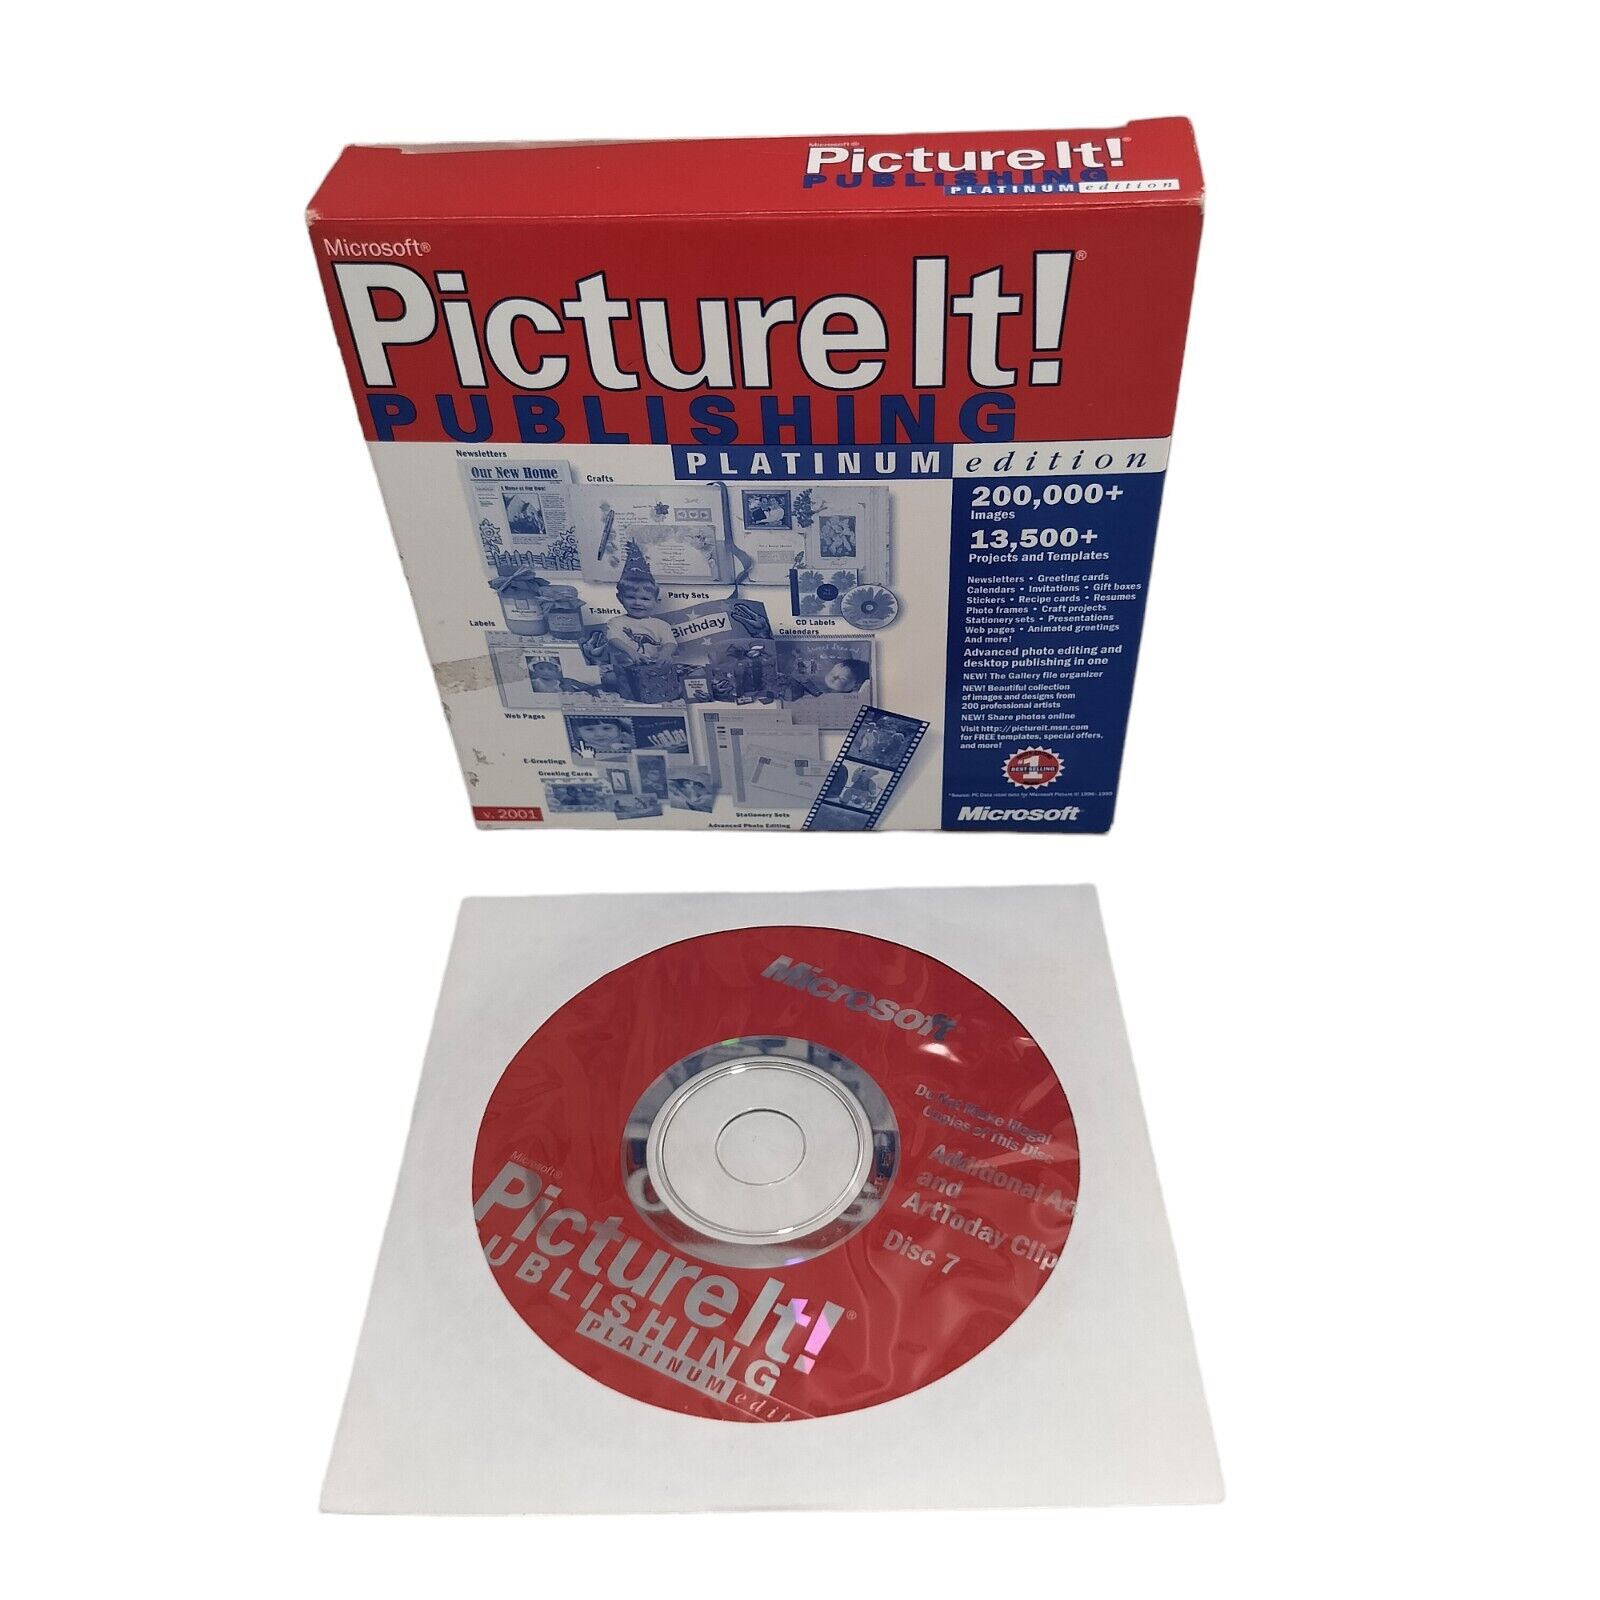 Microsoft Picture It Publishing Platinum v. 2001 Picture It Computer Disc #7